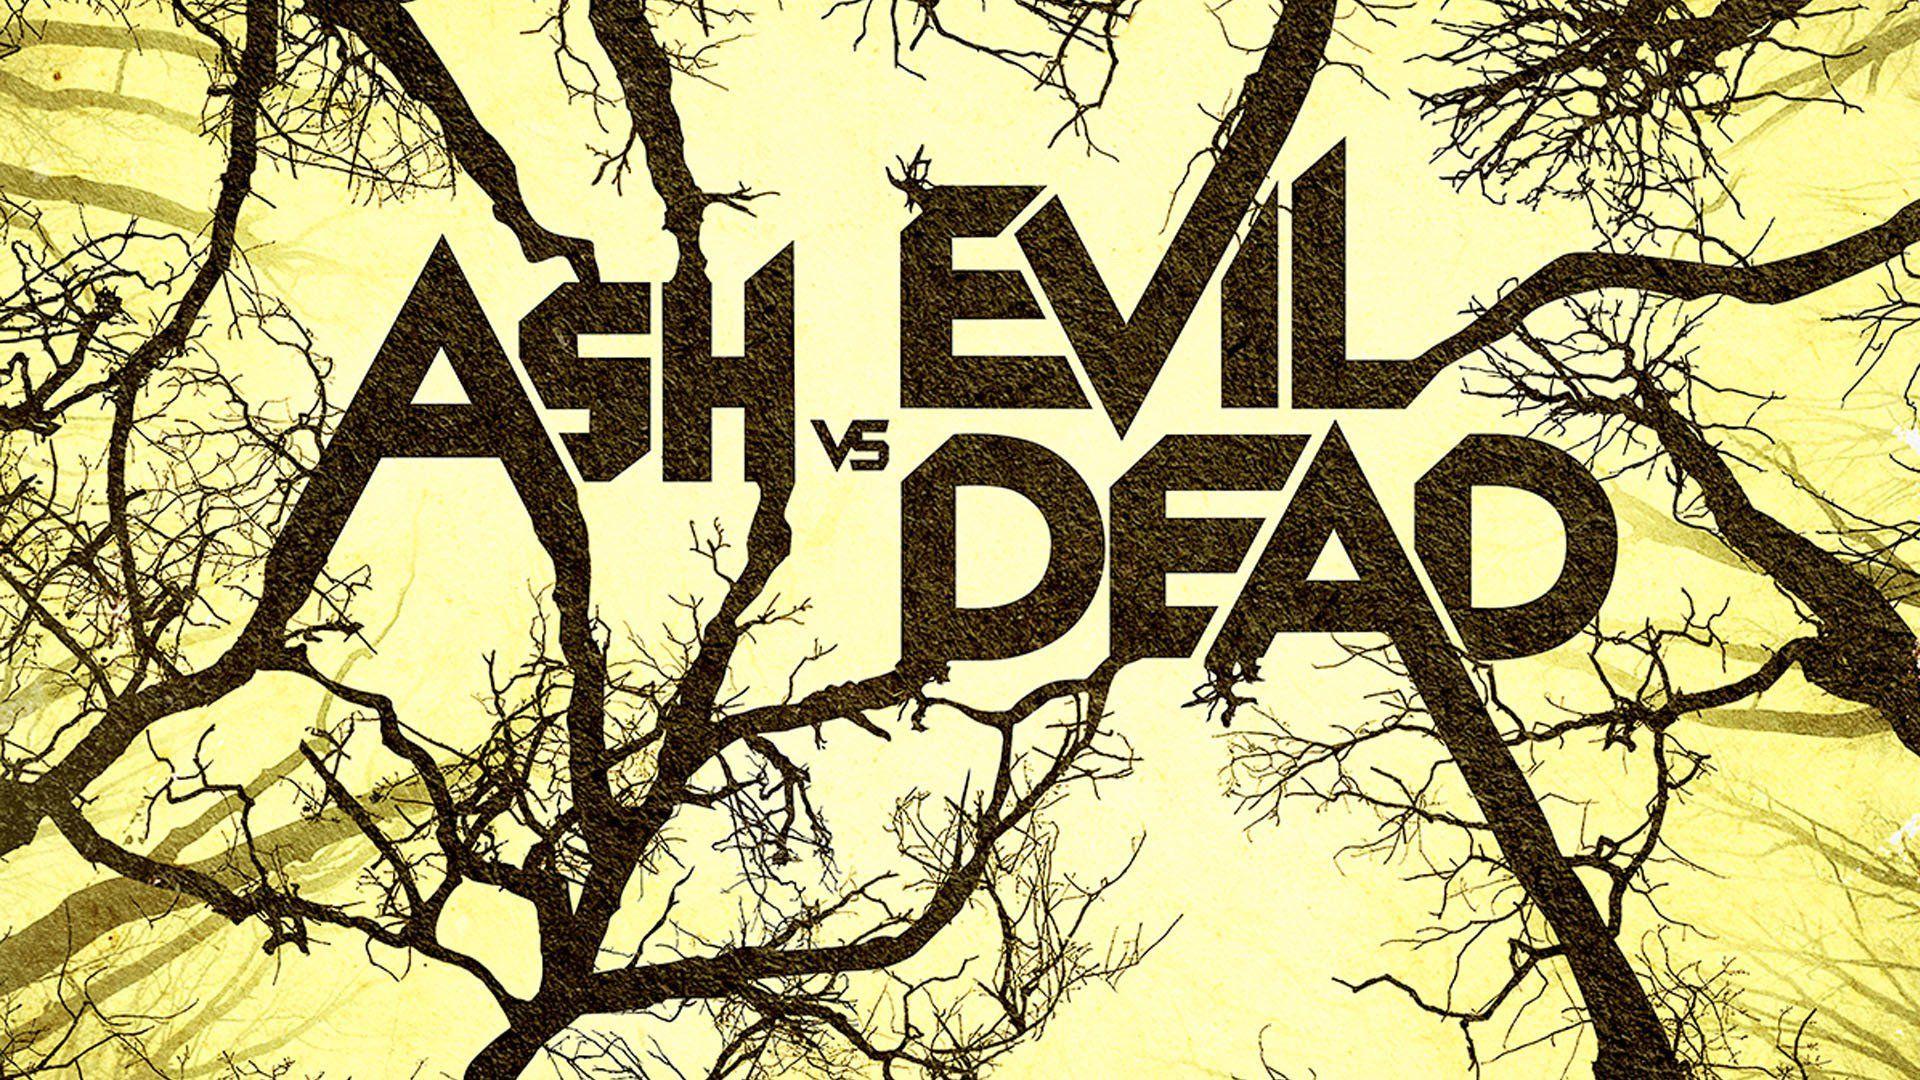 Ash Vs Evil Dead Wallpaper, Picture, Image